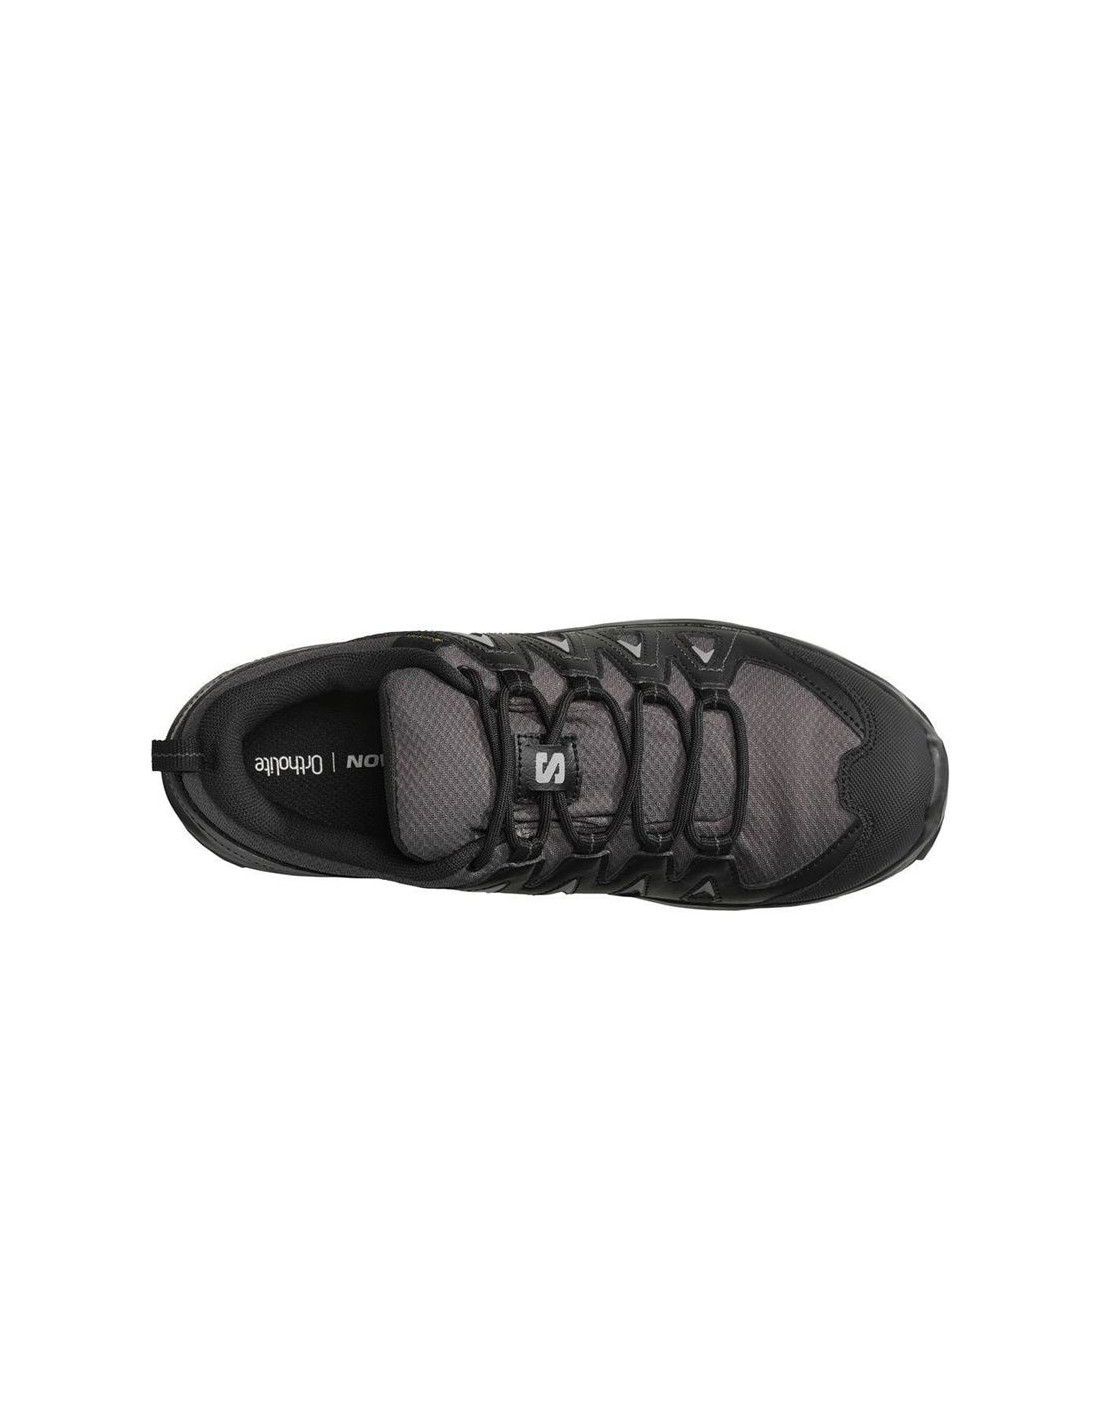 Salomon X Braze GTX negro gris Zapatillas Trekking Mujer